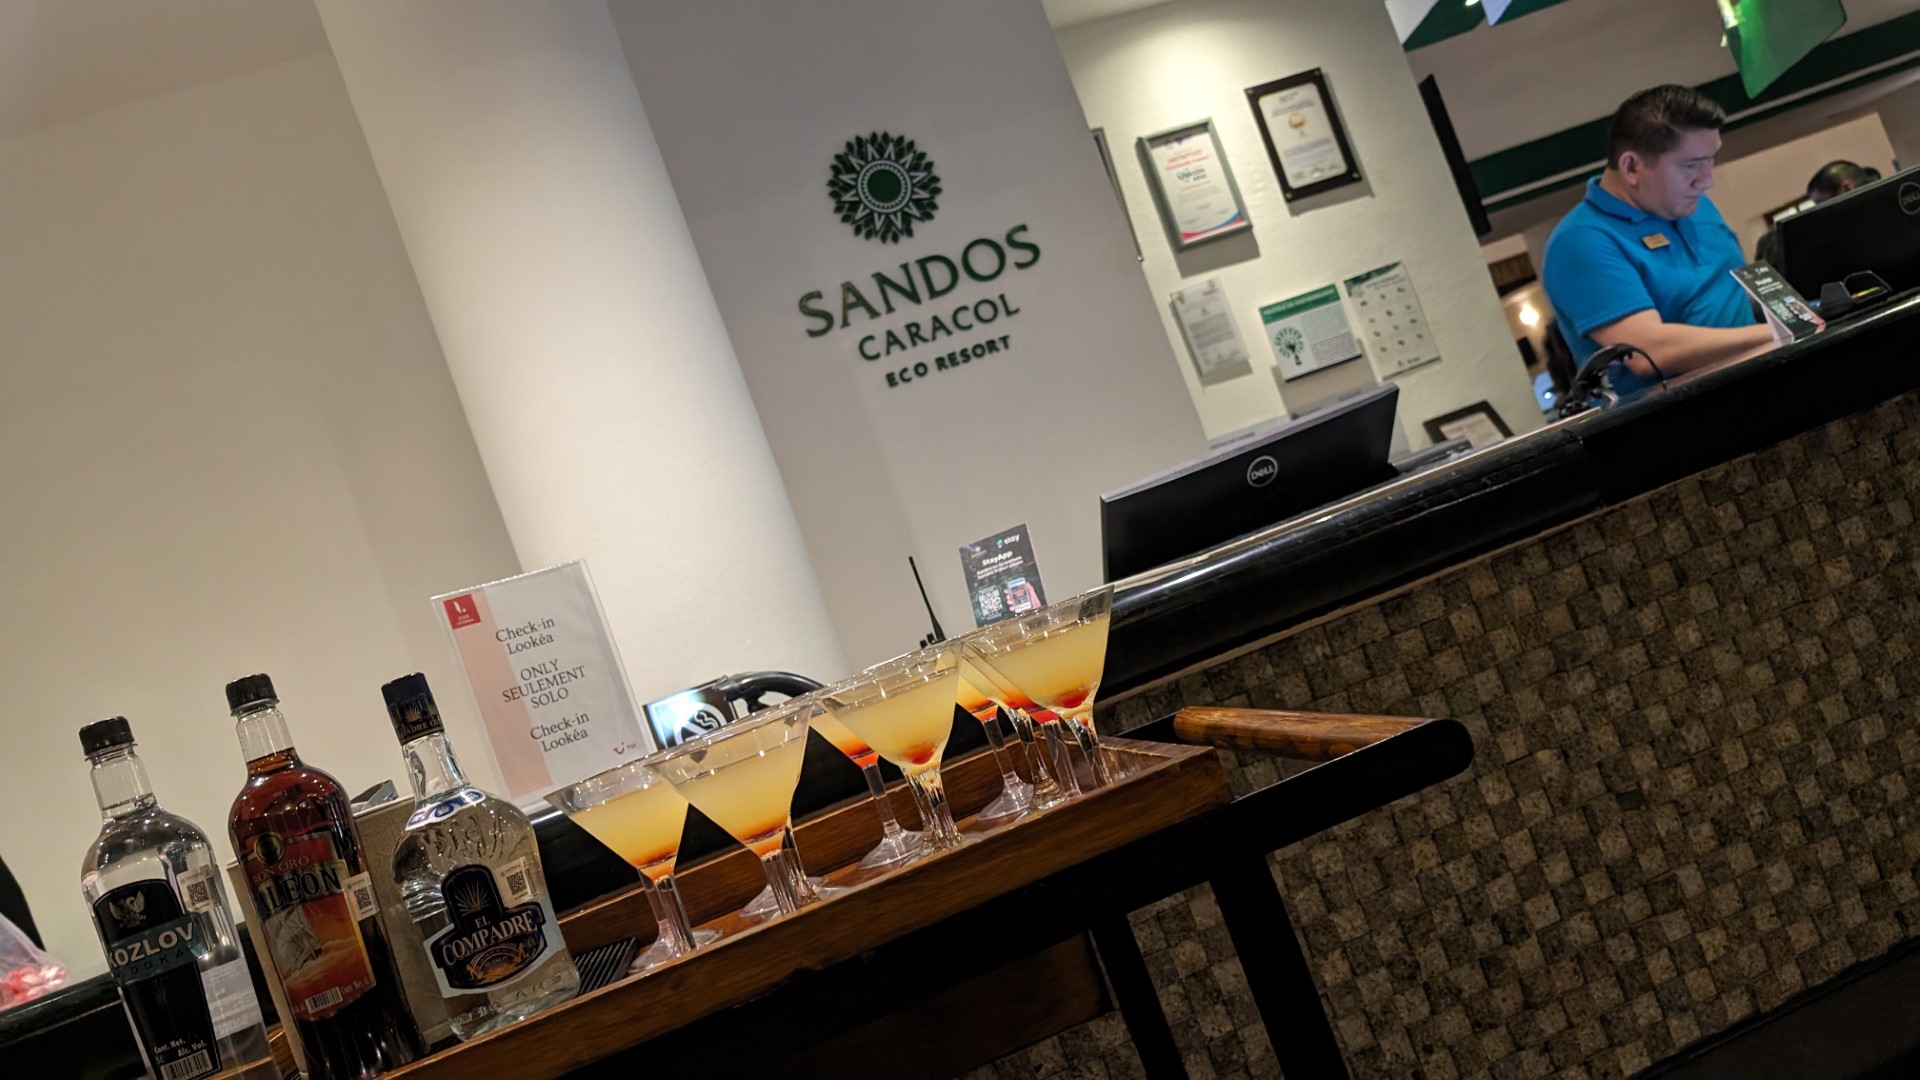 Sandos Resort check in